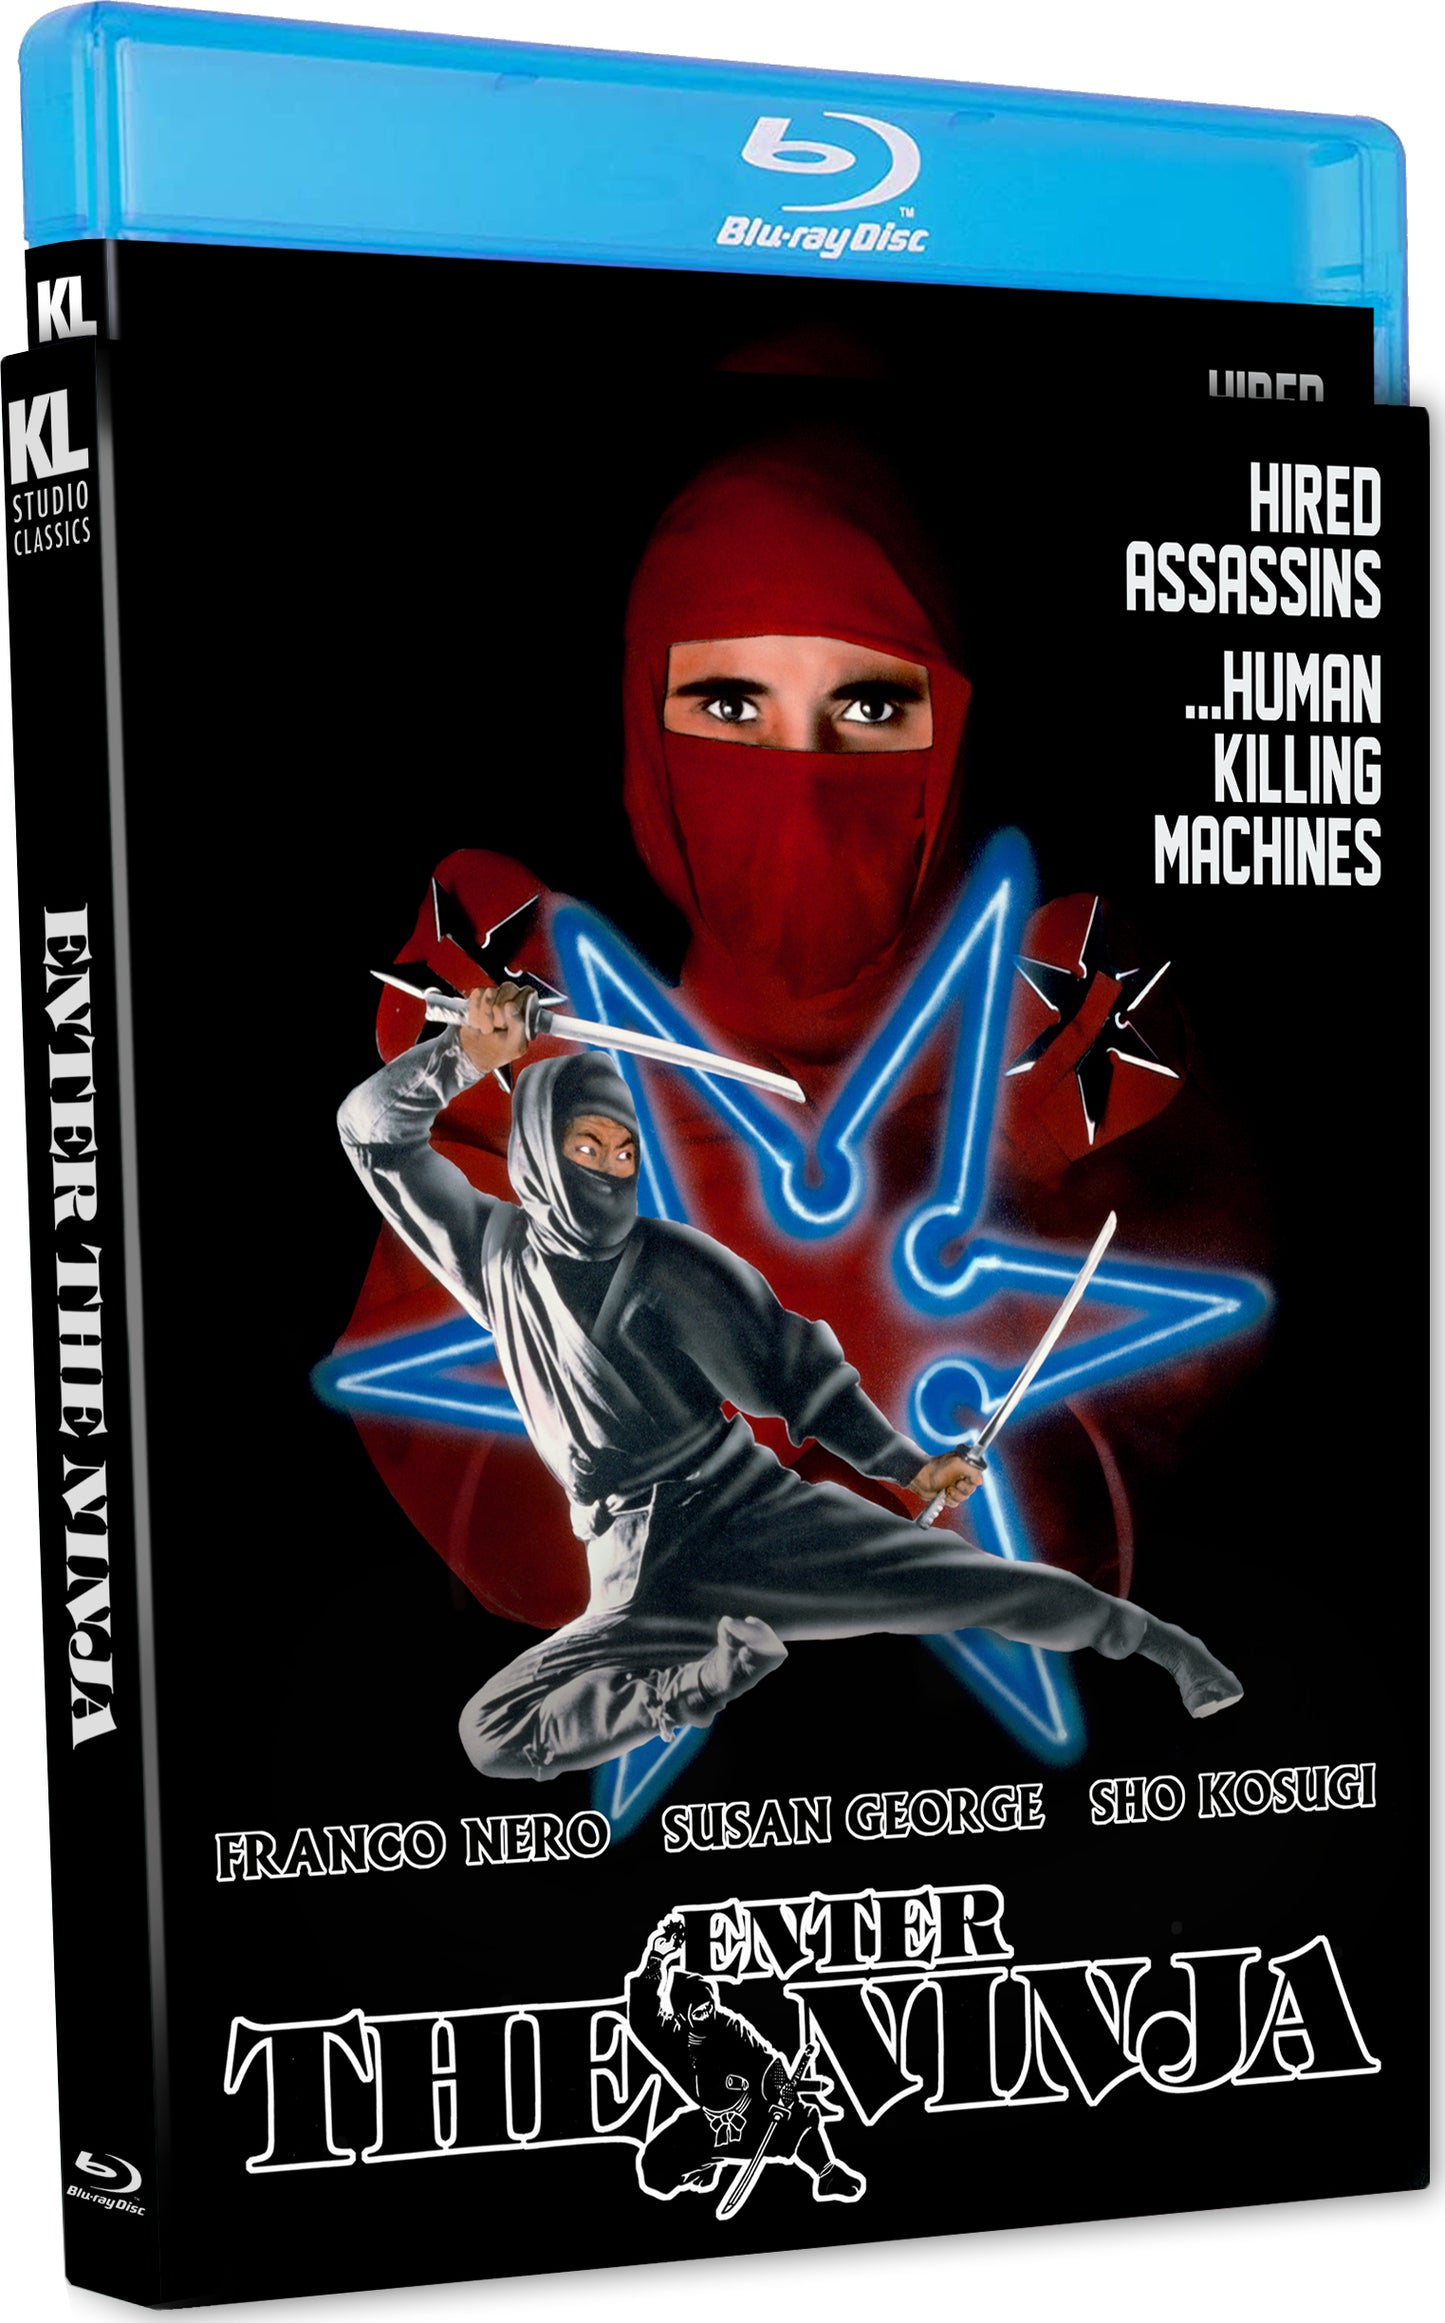 Enter the Ninja (Re-release)